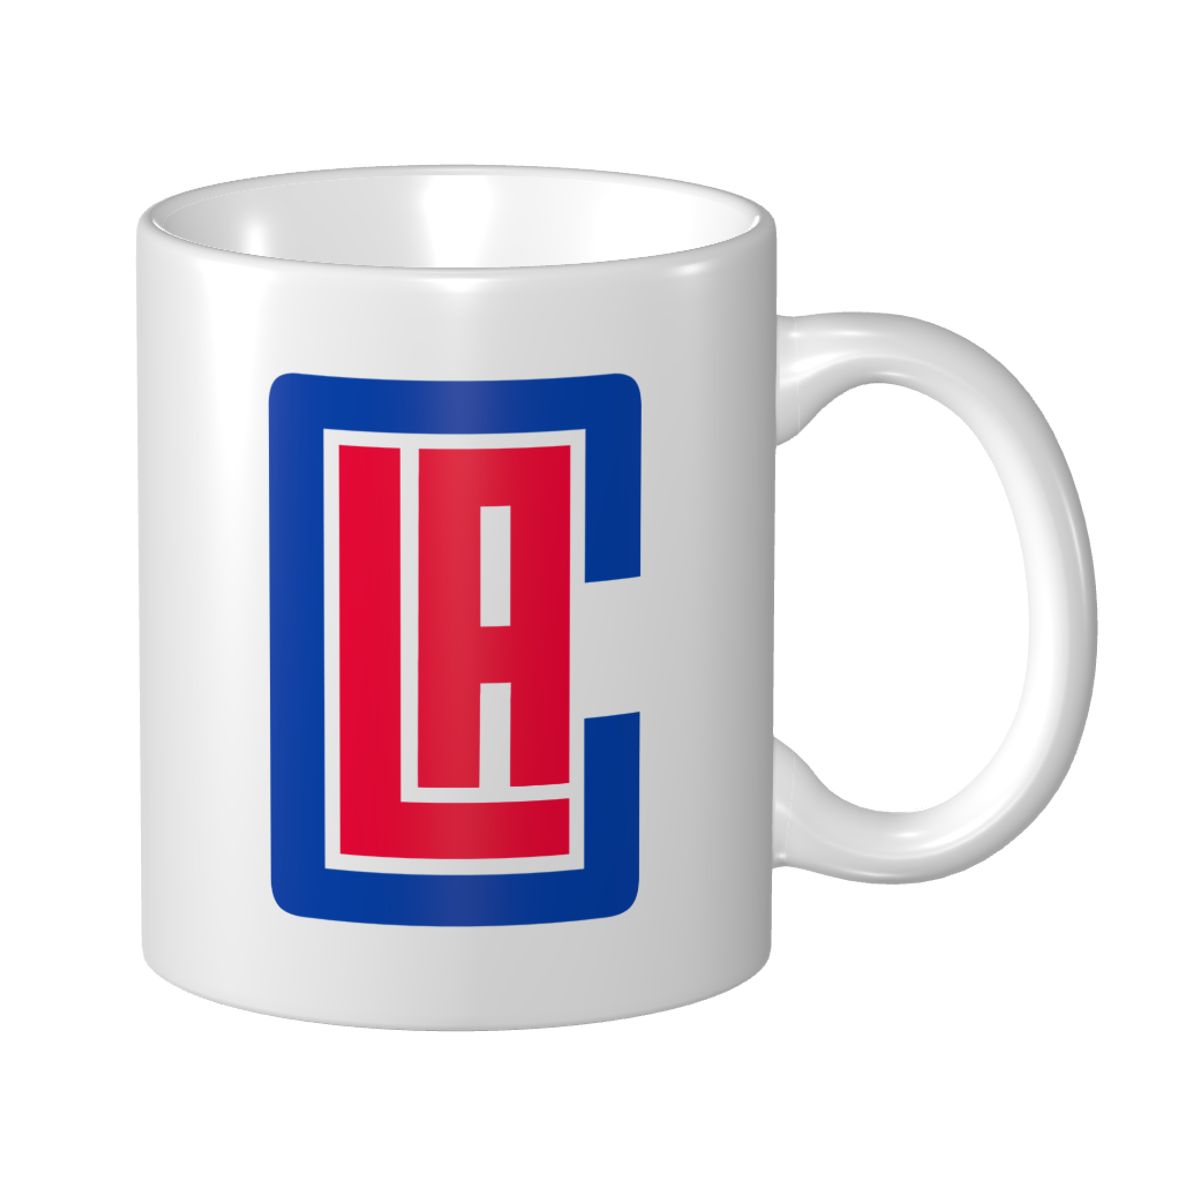 Los Angeles Clippers Logo Ceramic Mug